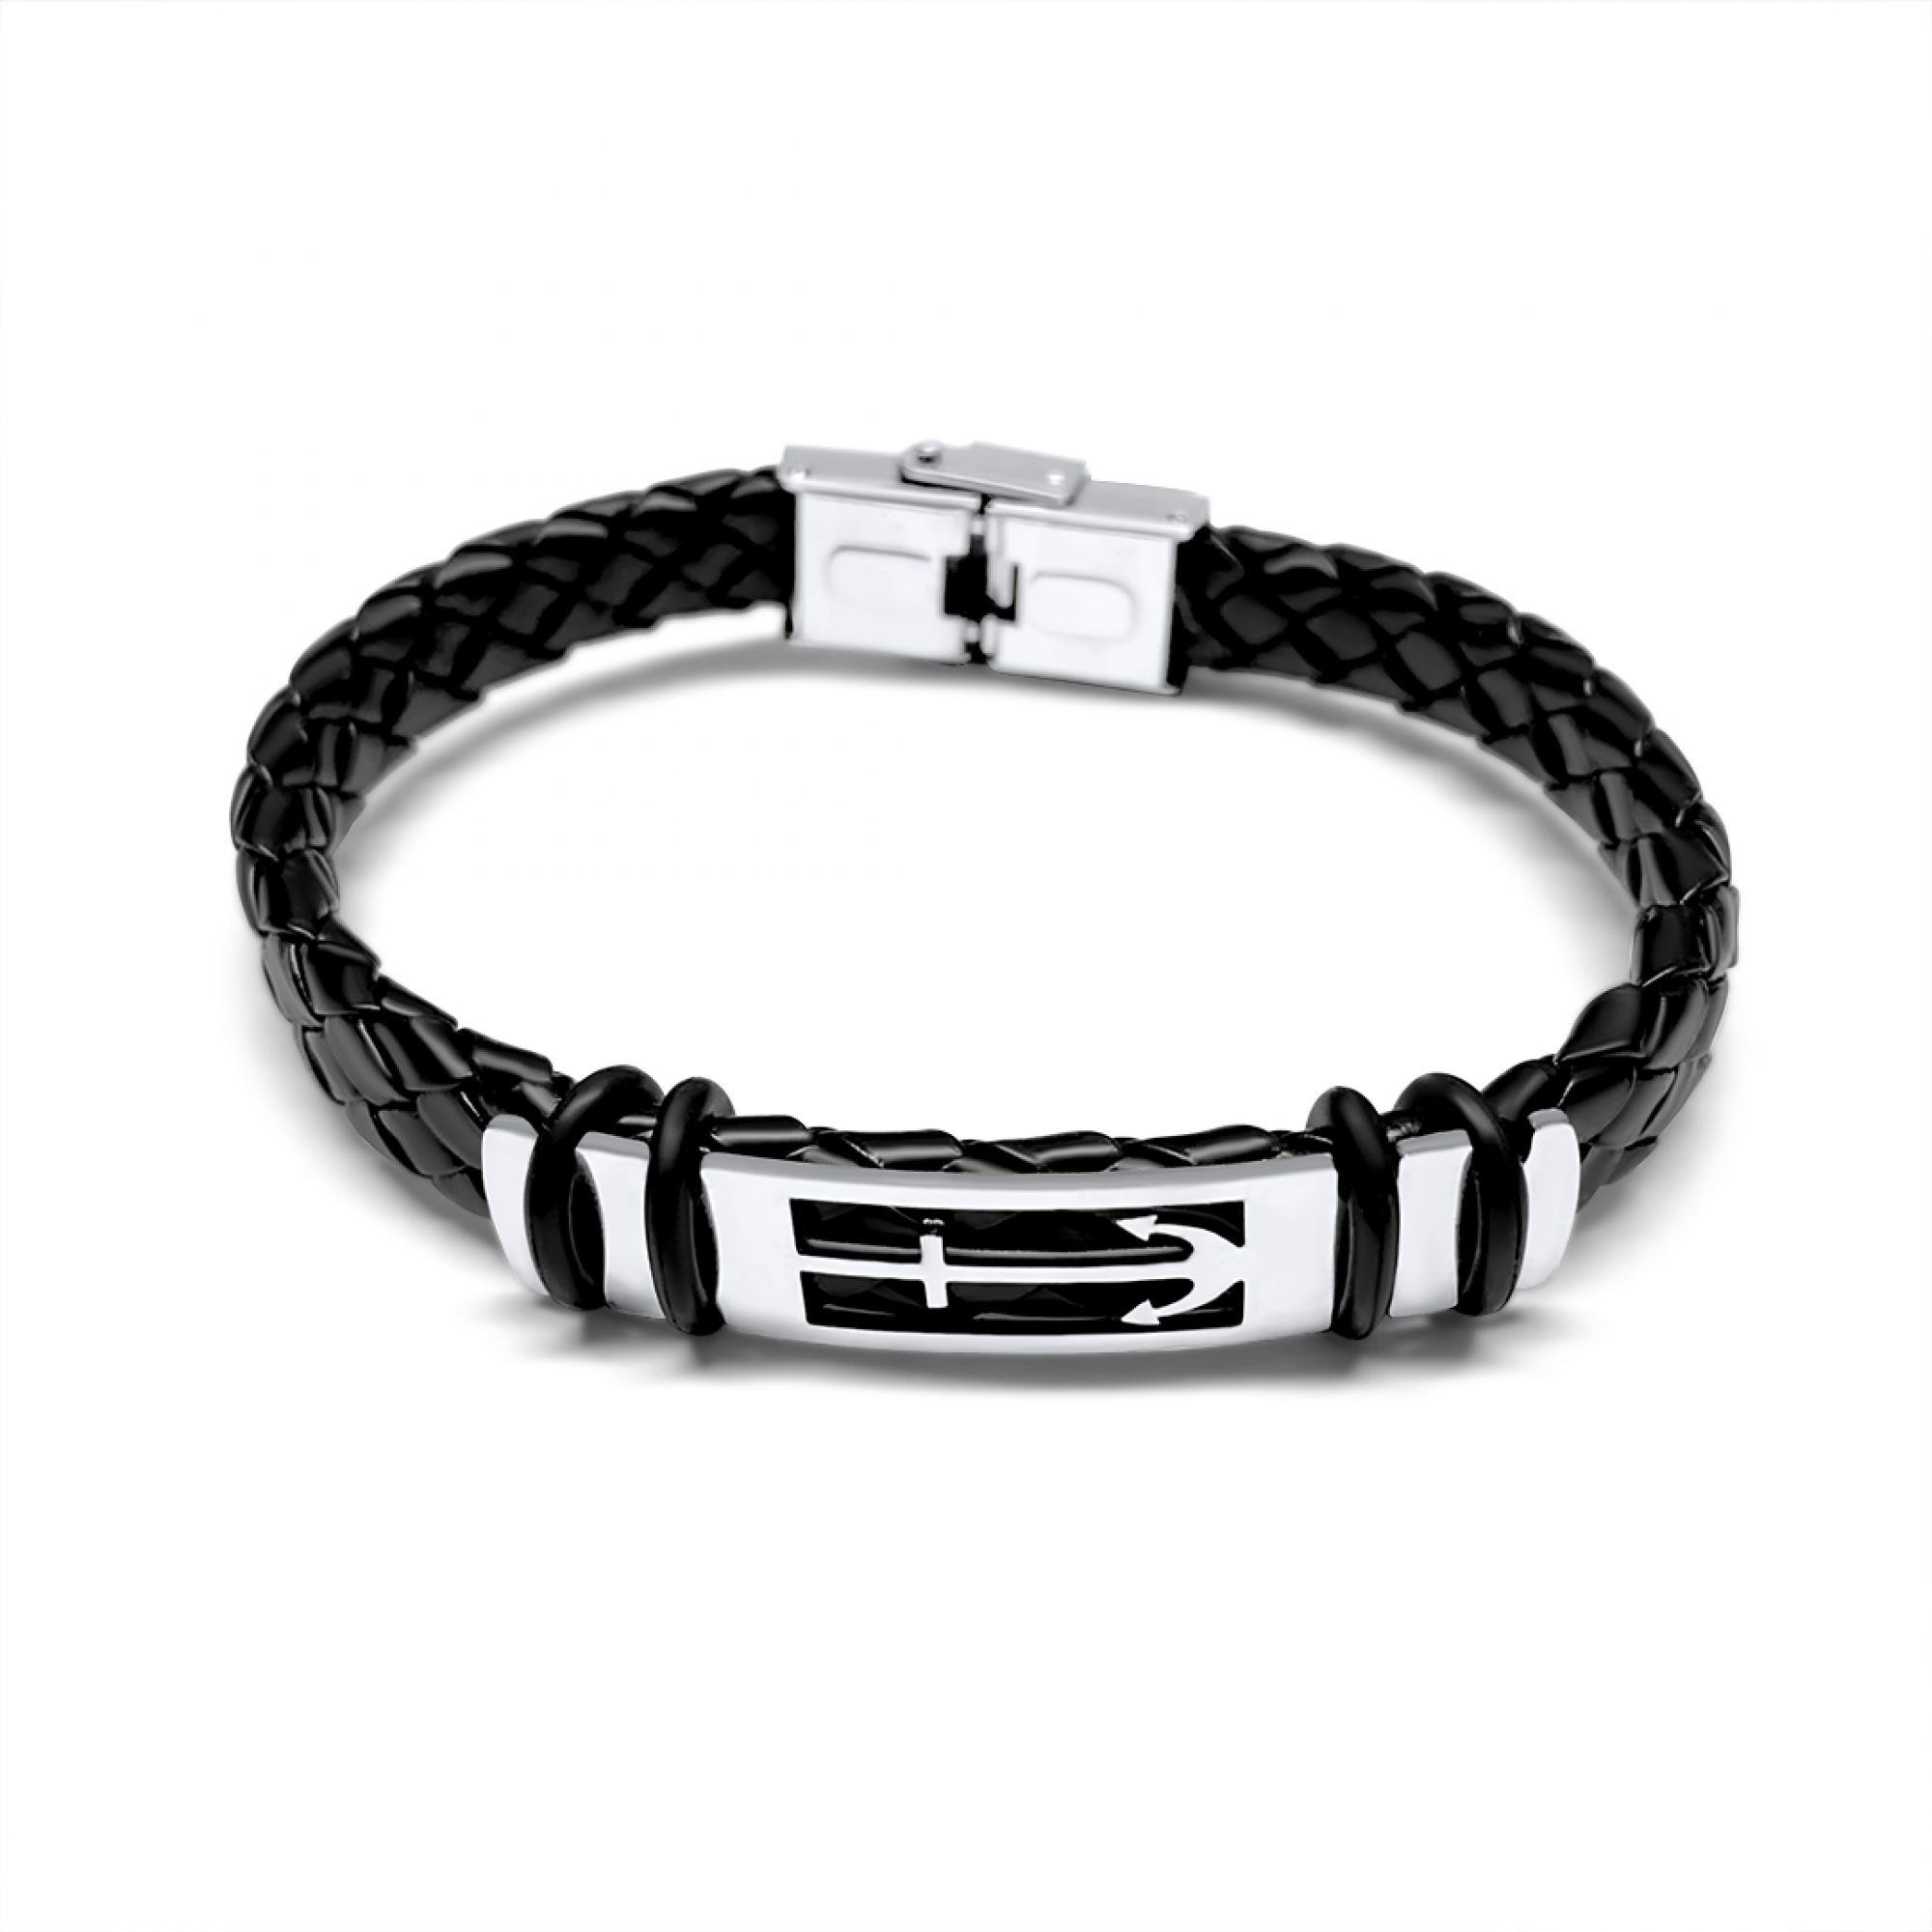 Steel-Caucho bracelet